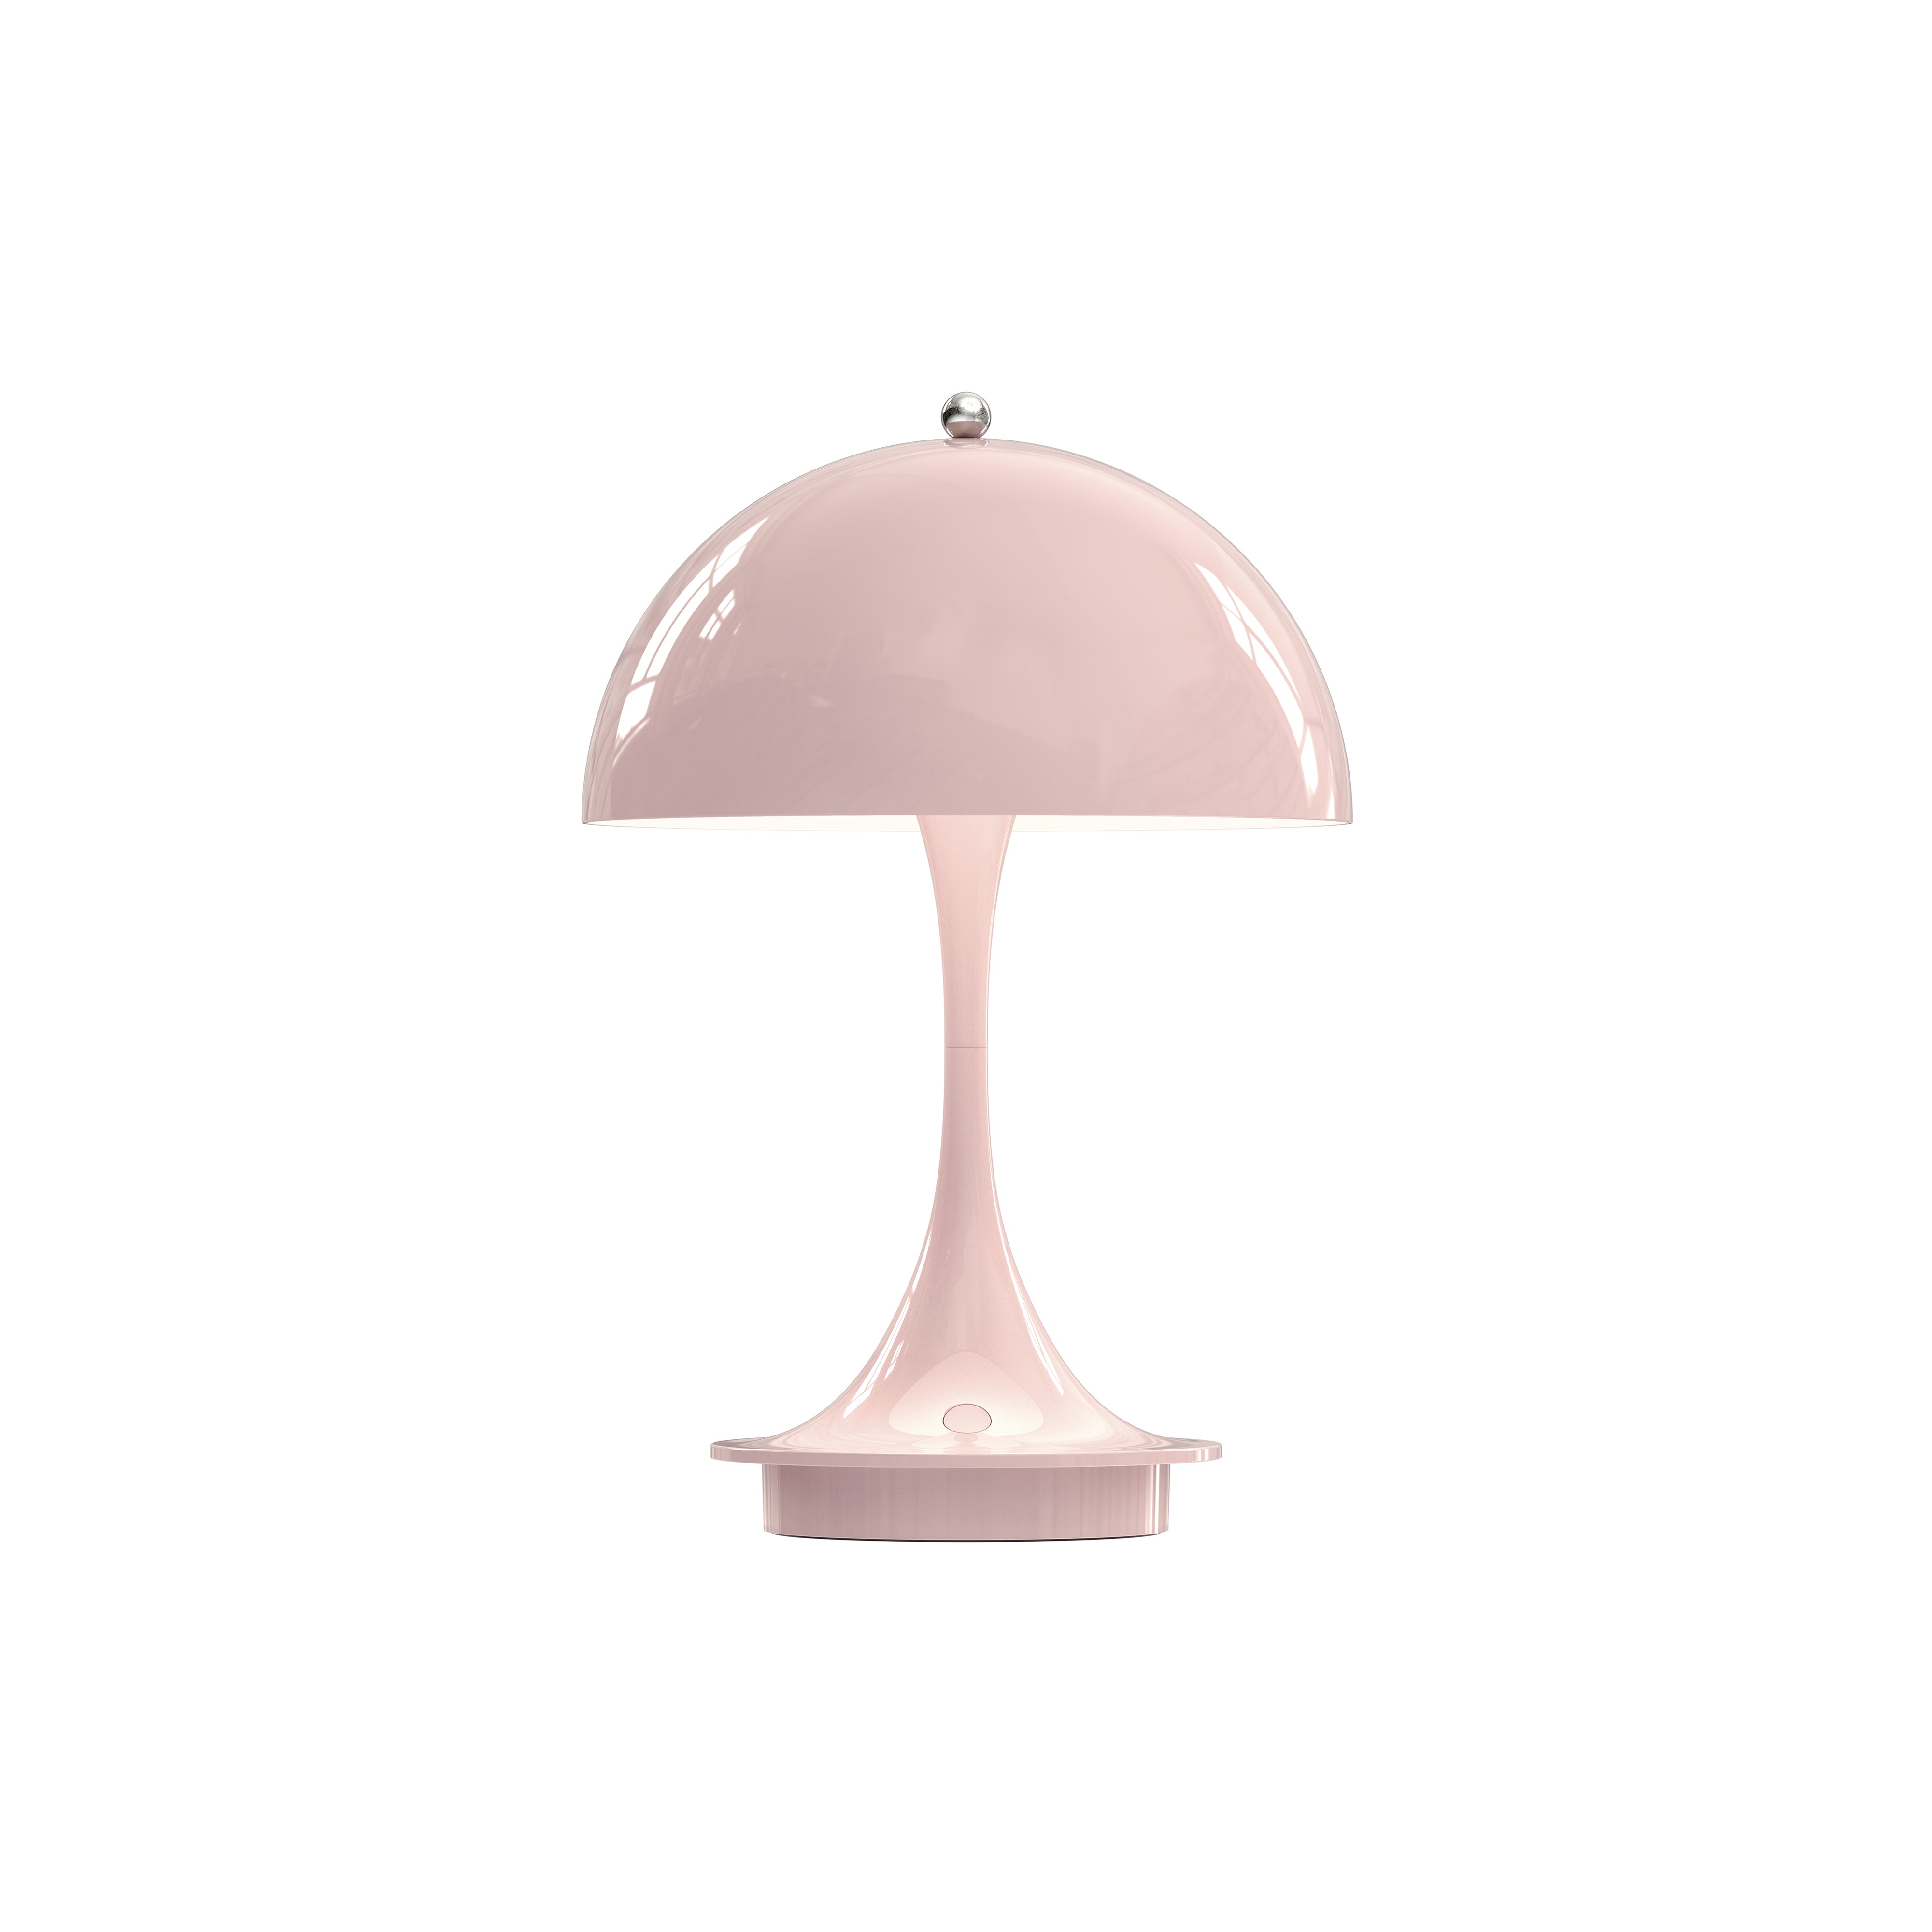 Panthella Portable Table Lamp: Pale Rose